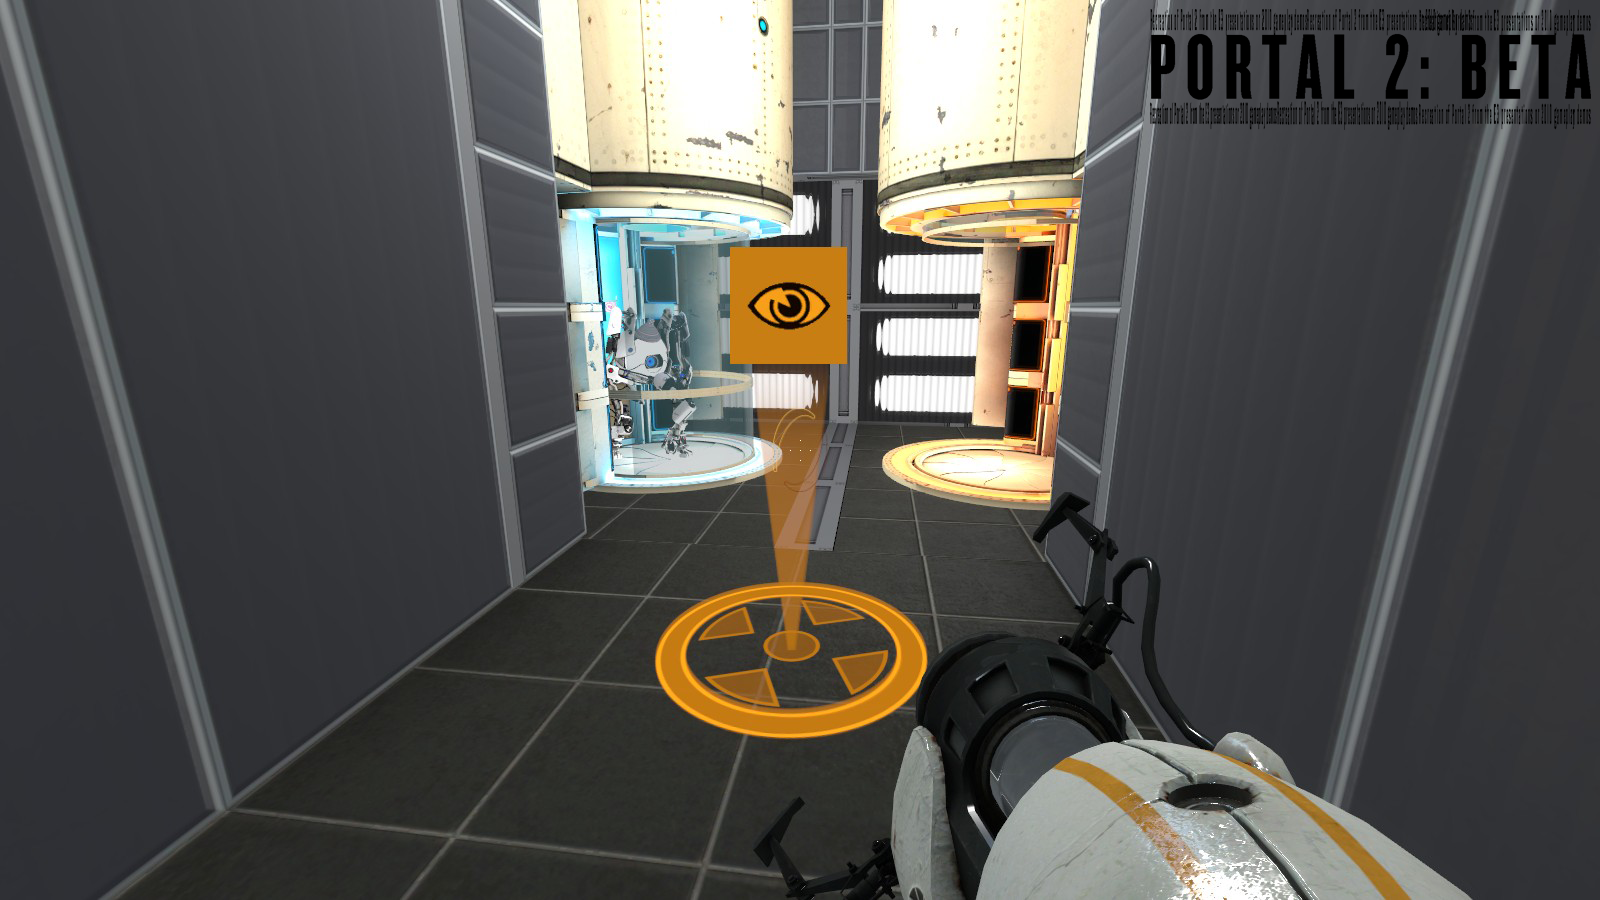 Co Op Demo W I P Pingtool Image Portal 2 Beta Mod For Portal 2 Mod Db